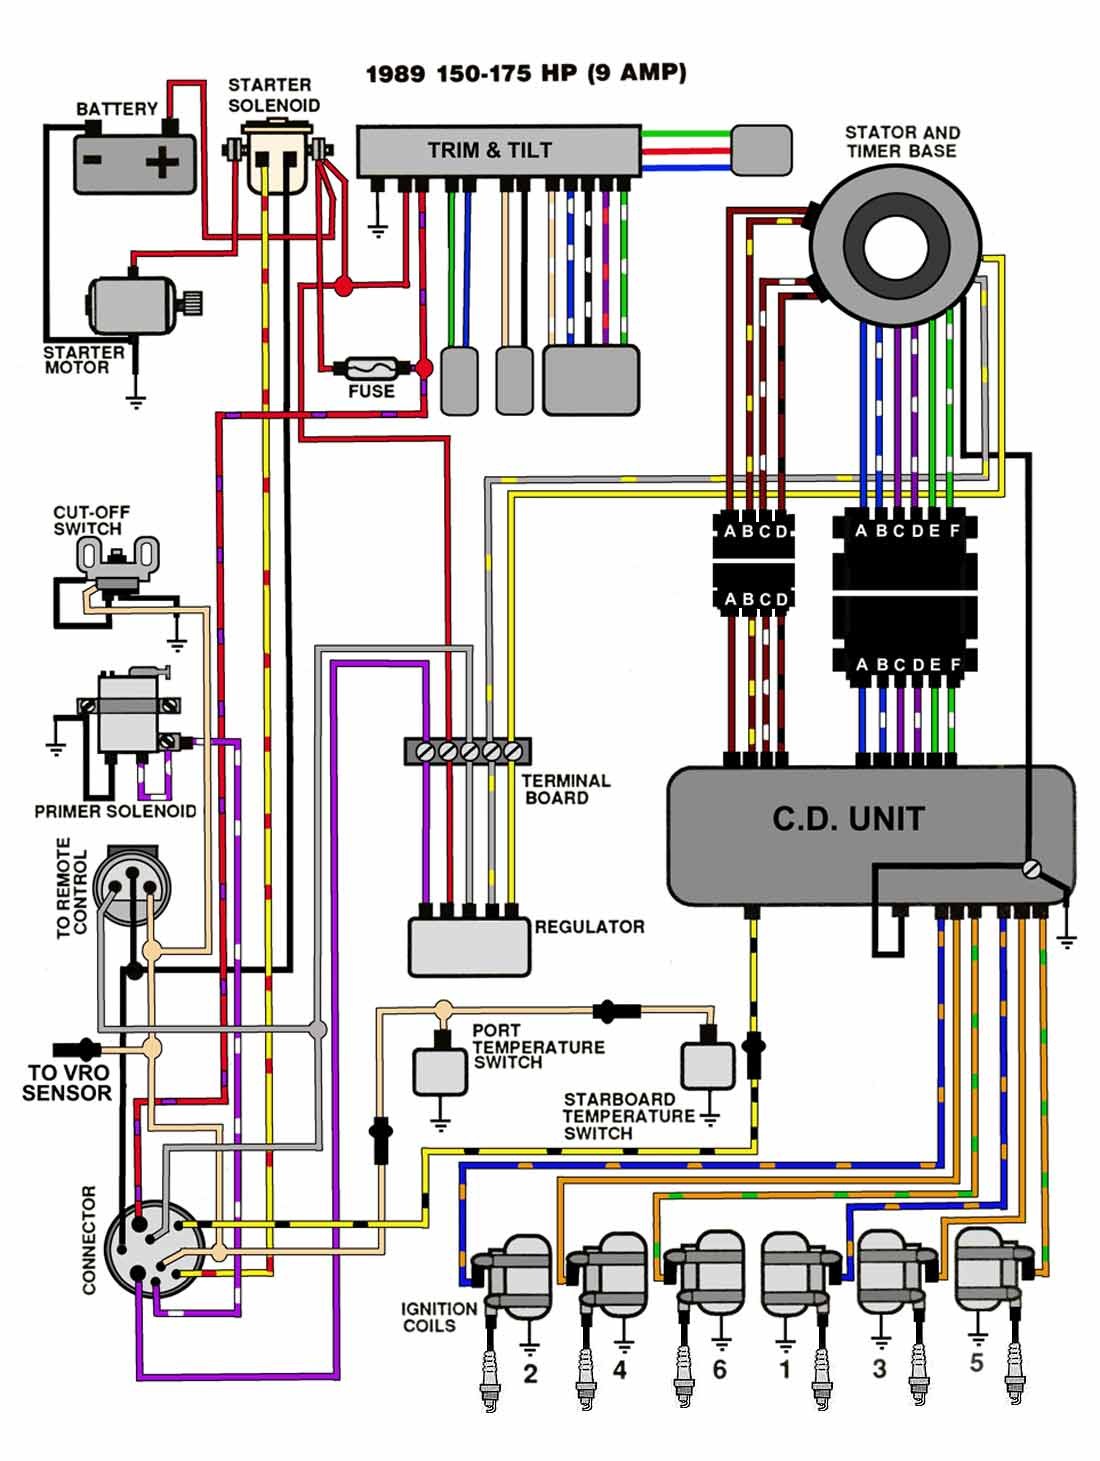 1977 Evinrude 35 Hp Wiring Diagram - easywiring